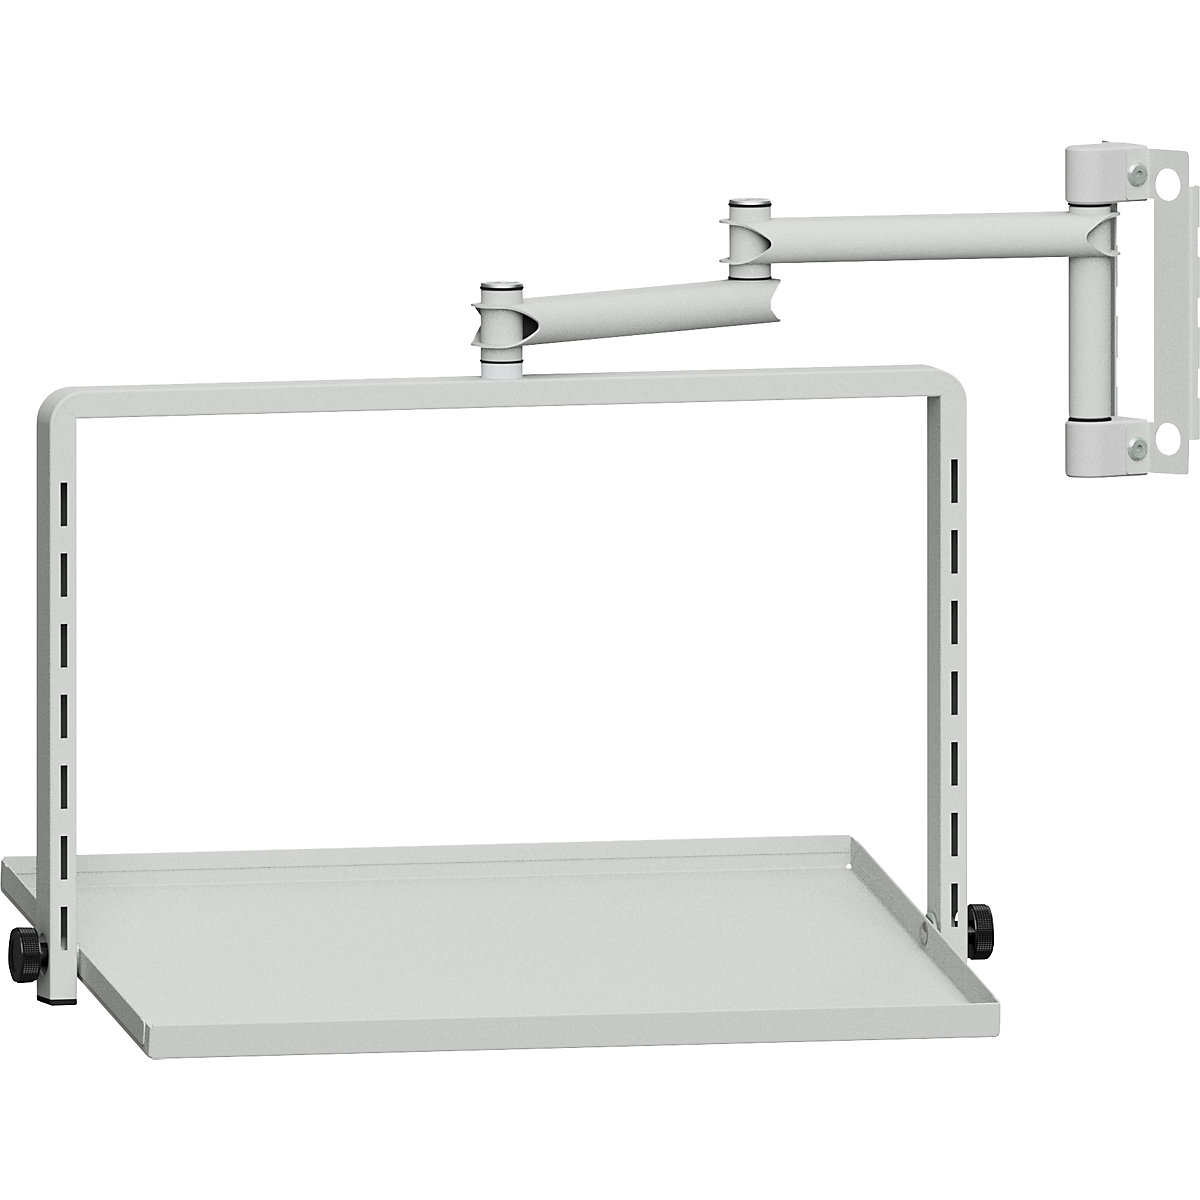 Storage tray for swivelling base frame - ANKE